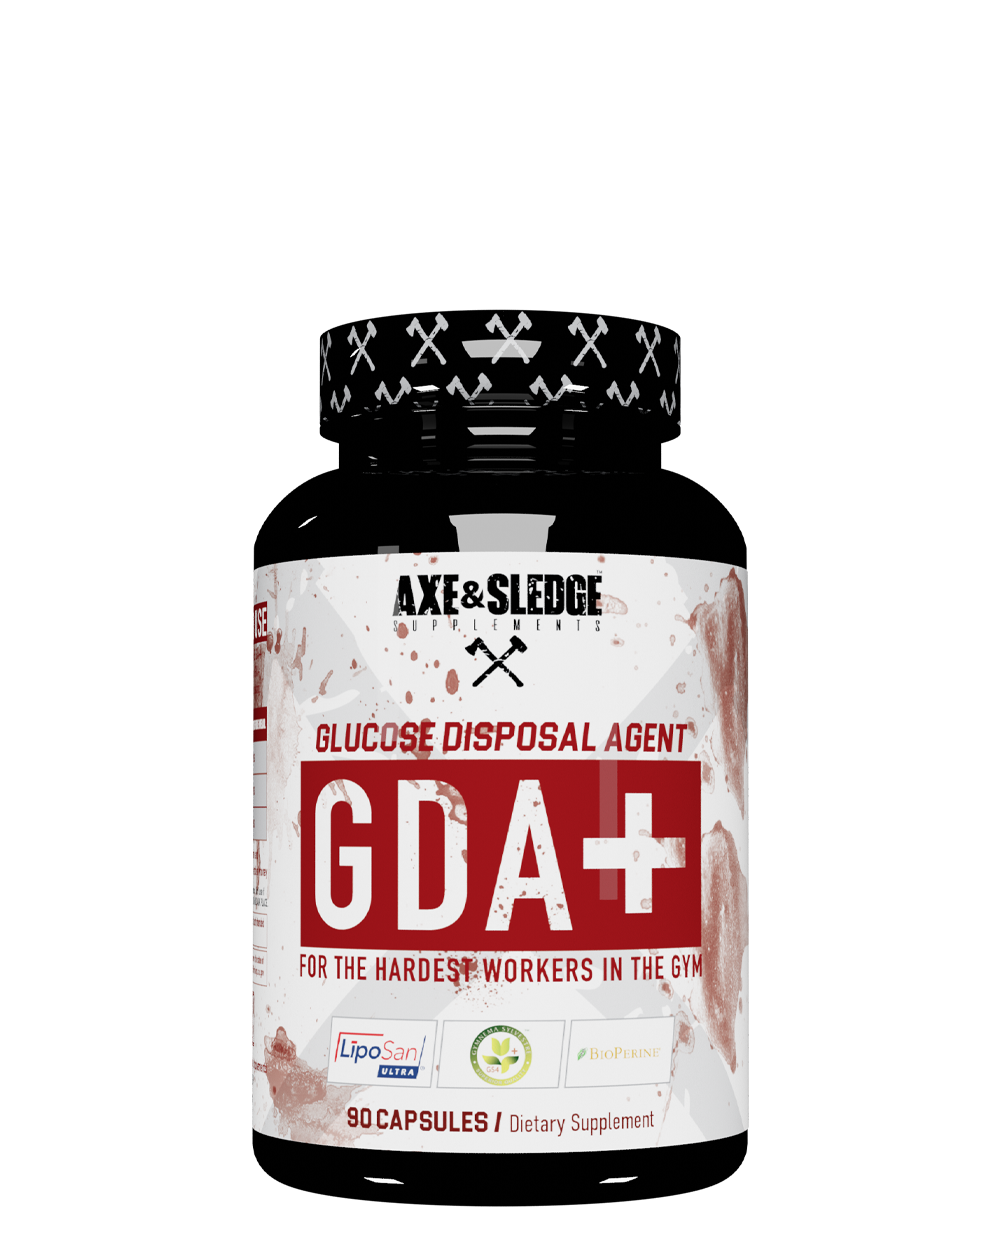 GDA+ Glucose Disposal Agent